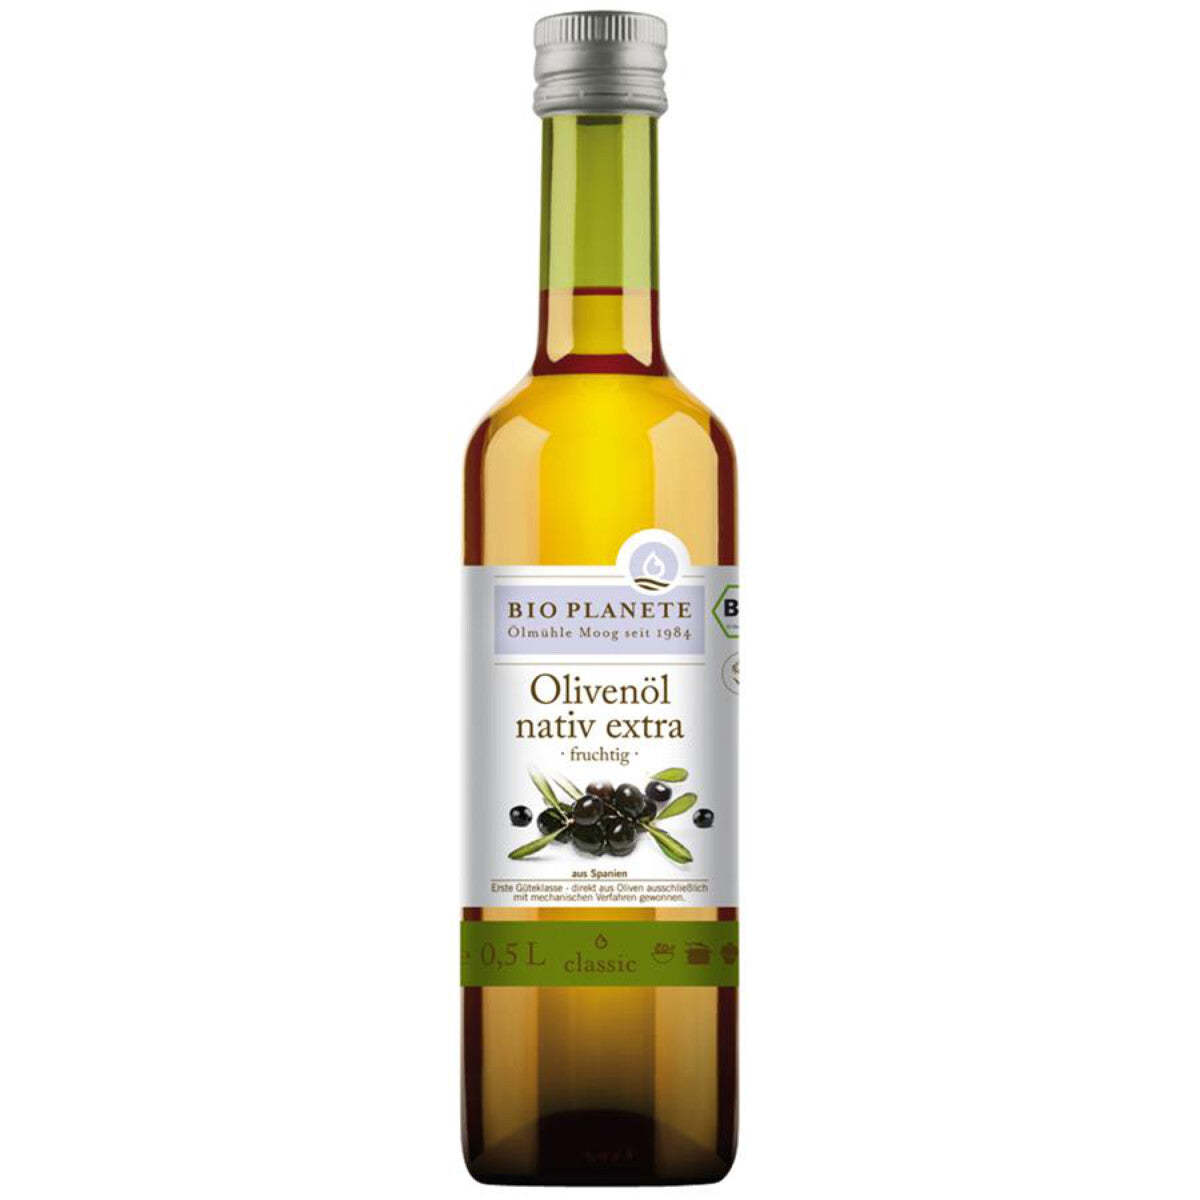 BIO PLANETE Olivenöl fruchtig, nativ extra - 0,5 l